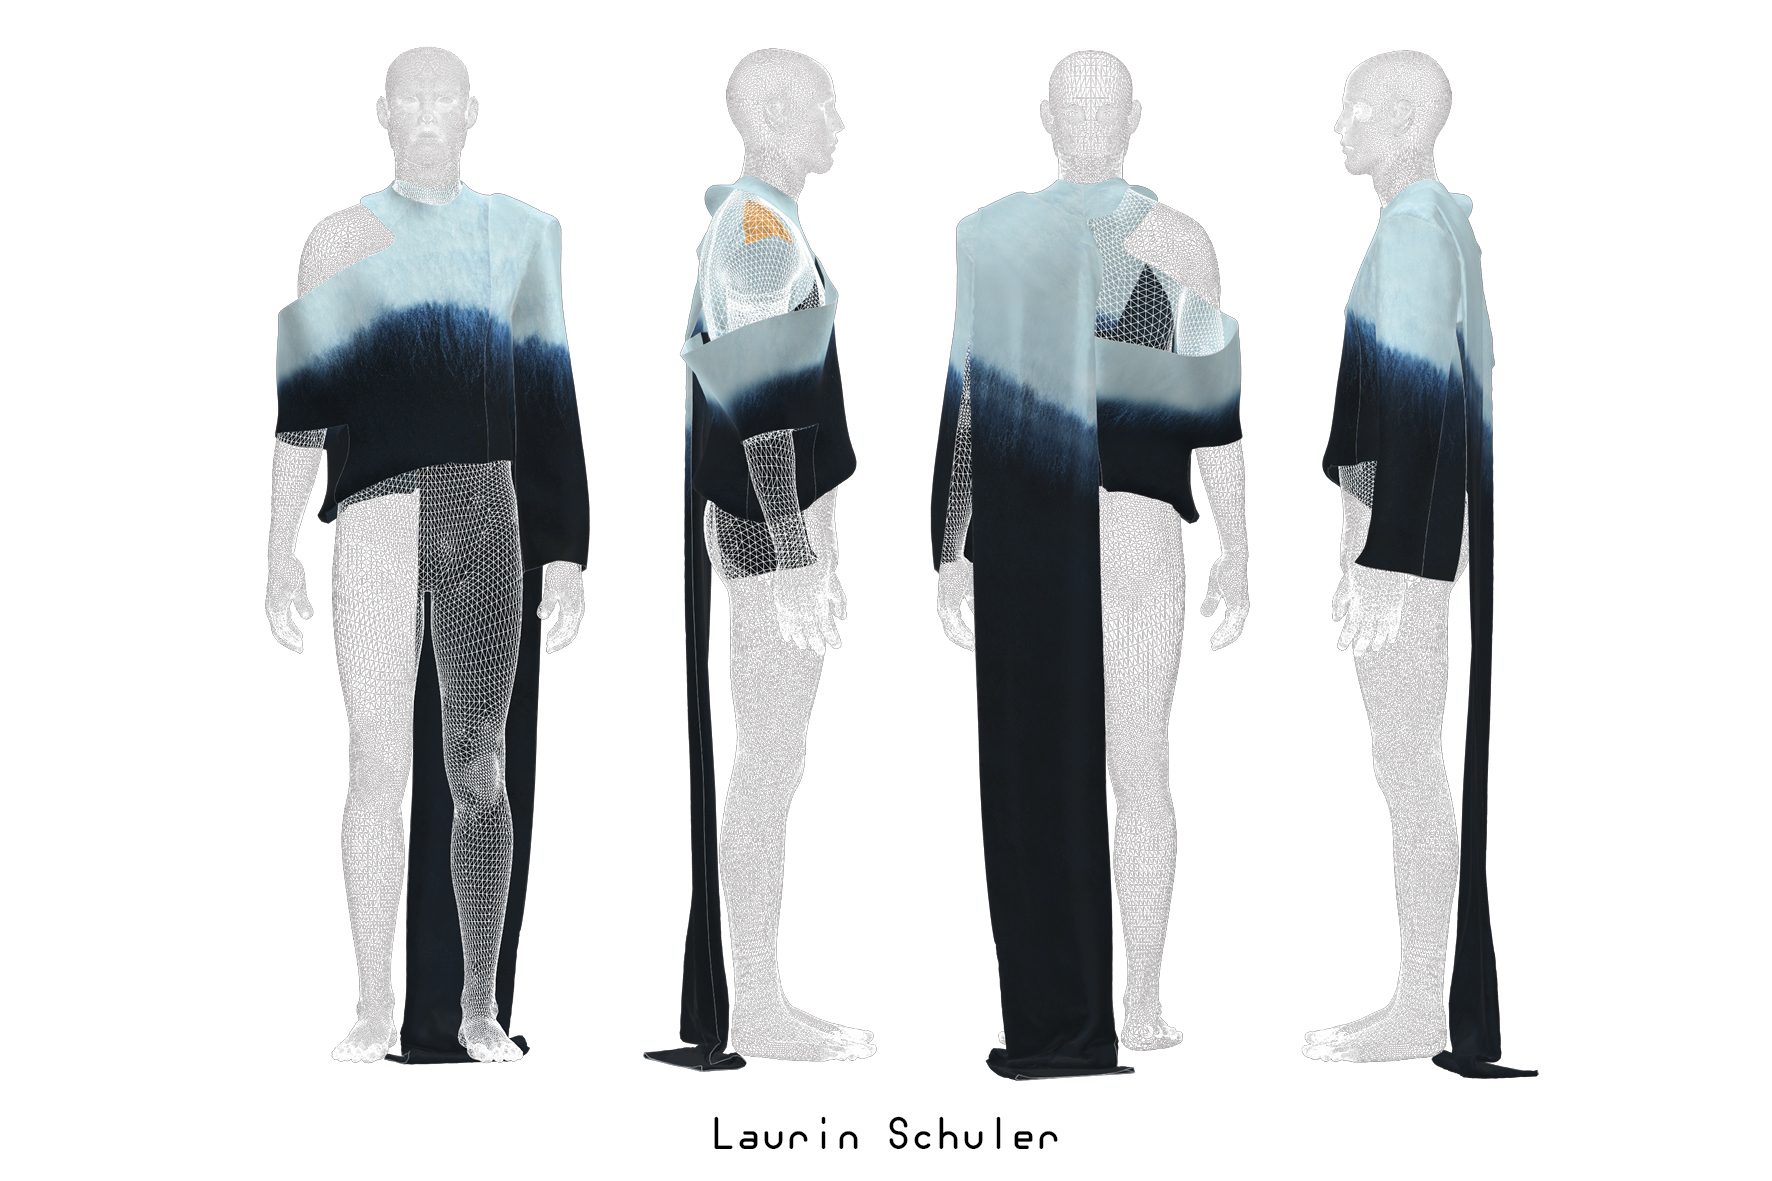 Design Laurin Schuler